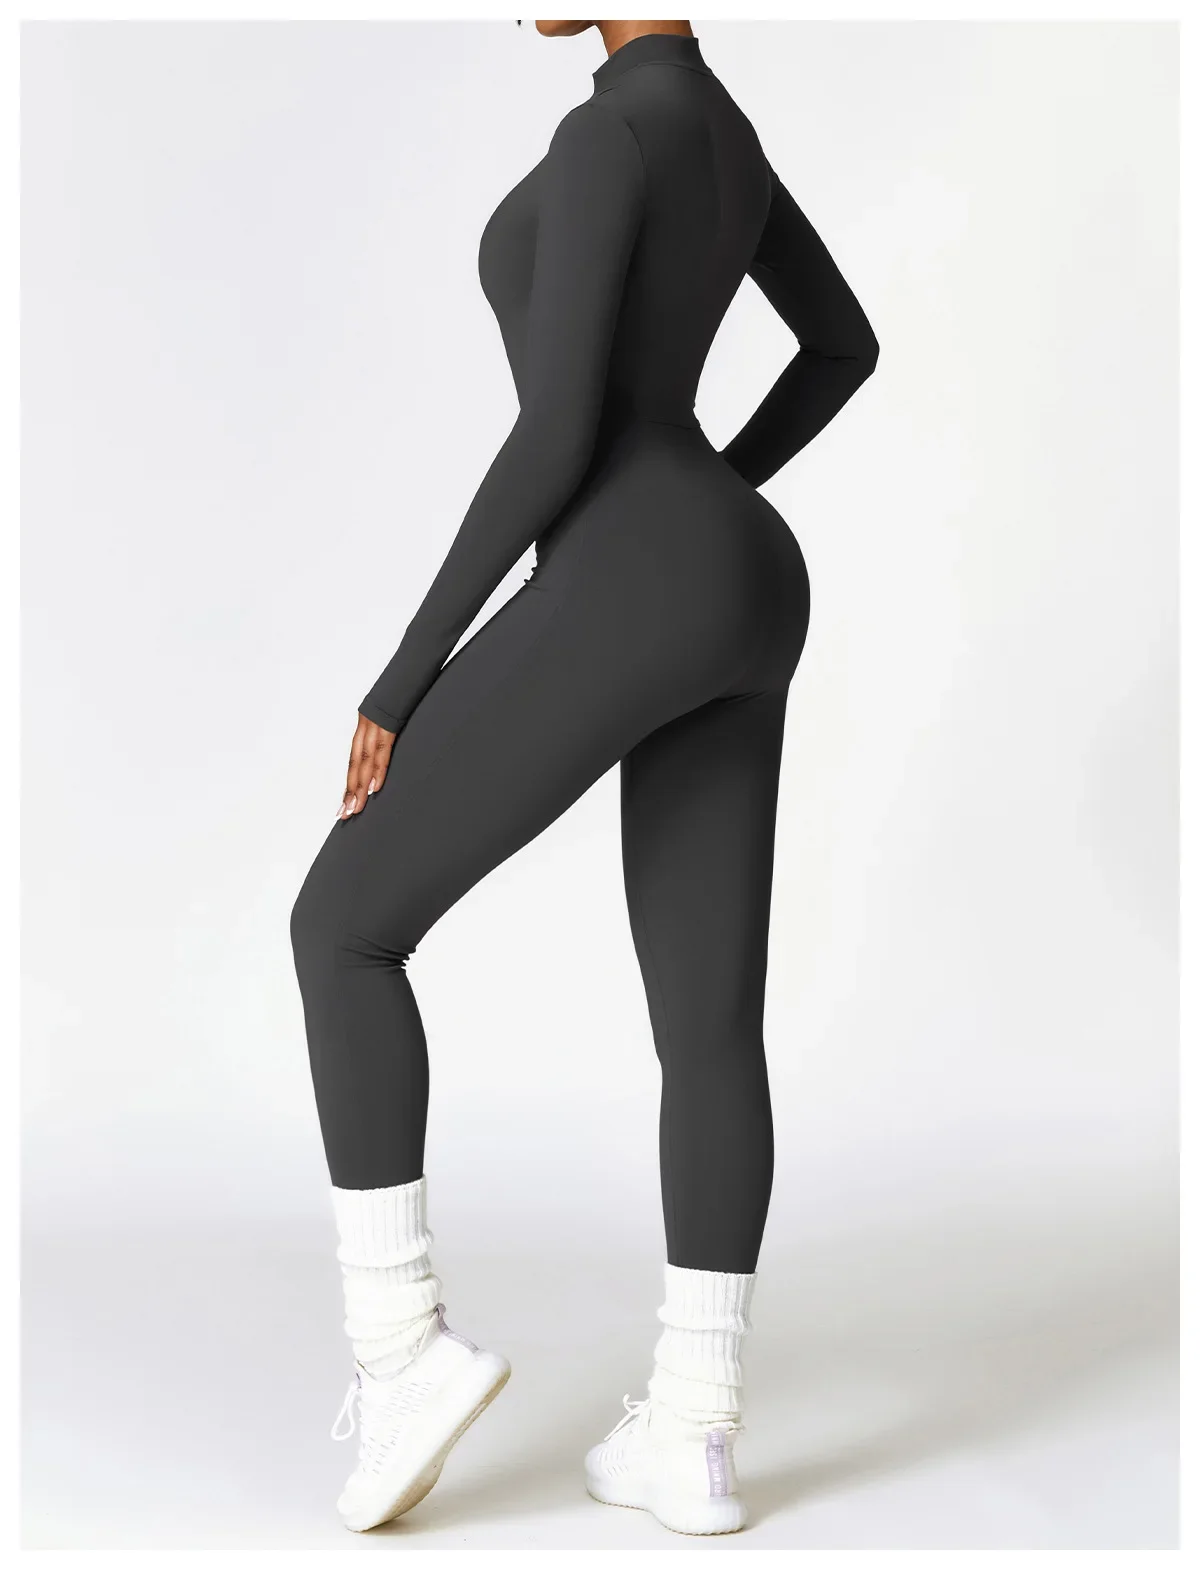 Yoke Custom One Piece Yoga Bodysuit Women Long Sleeve Fitness Jumpsuit ...